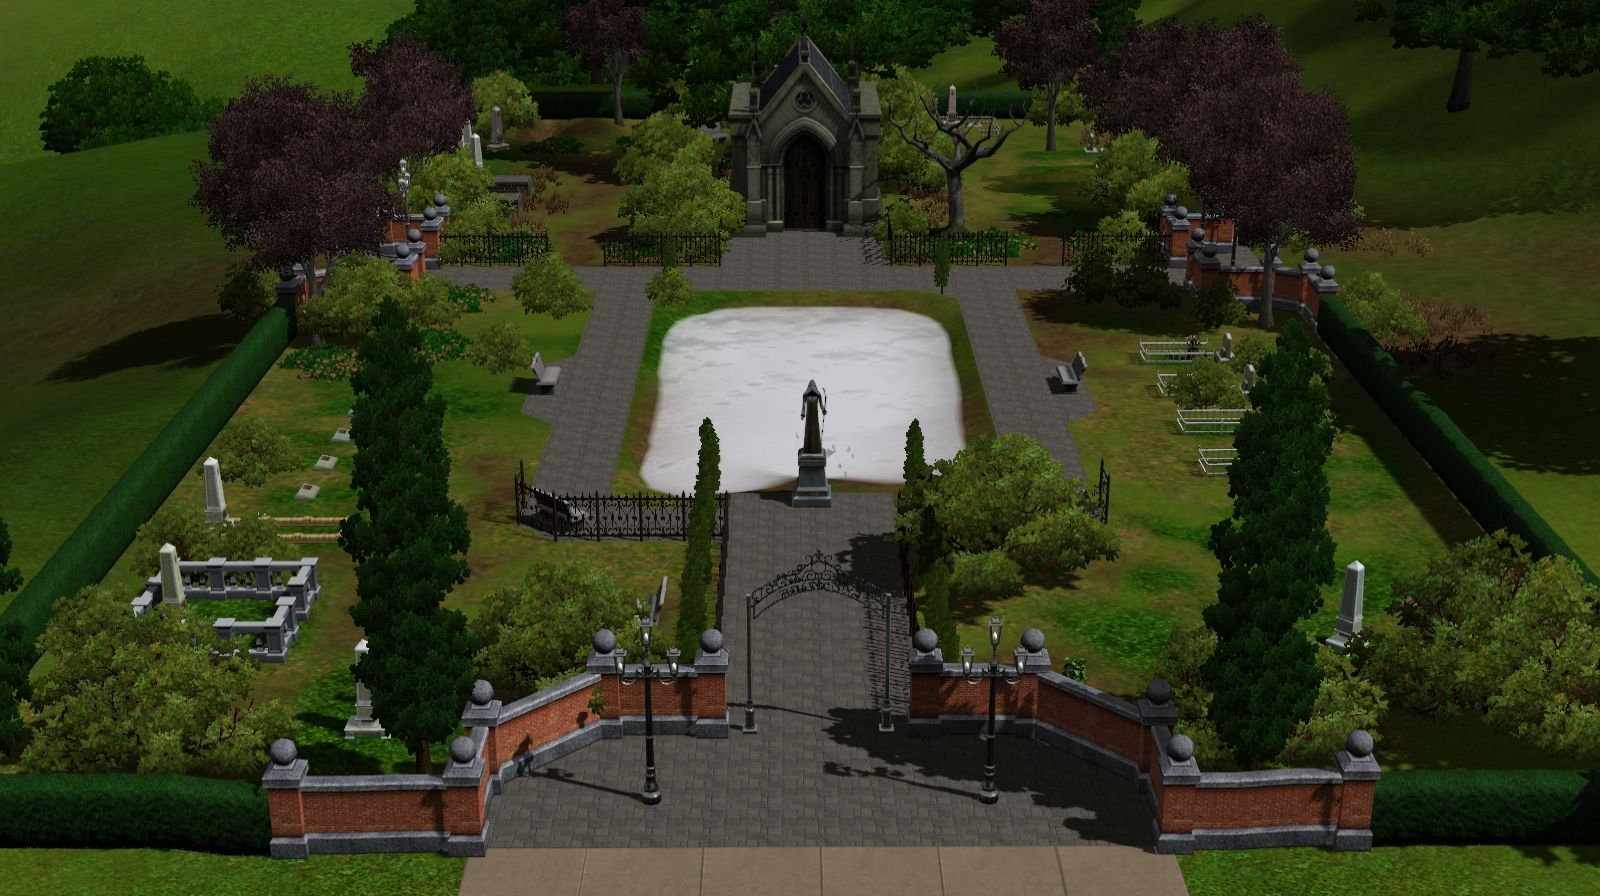 30 Hidden Details In The Original Sims Games